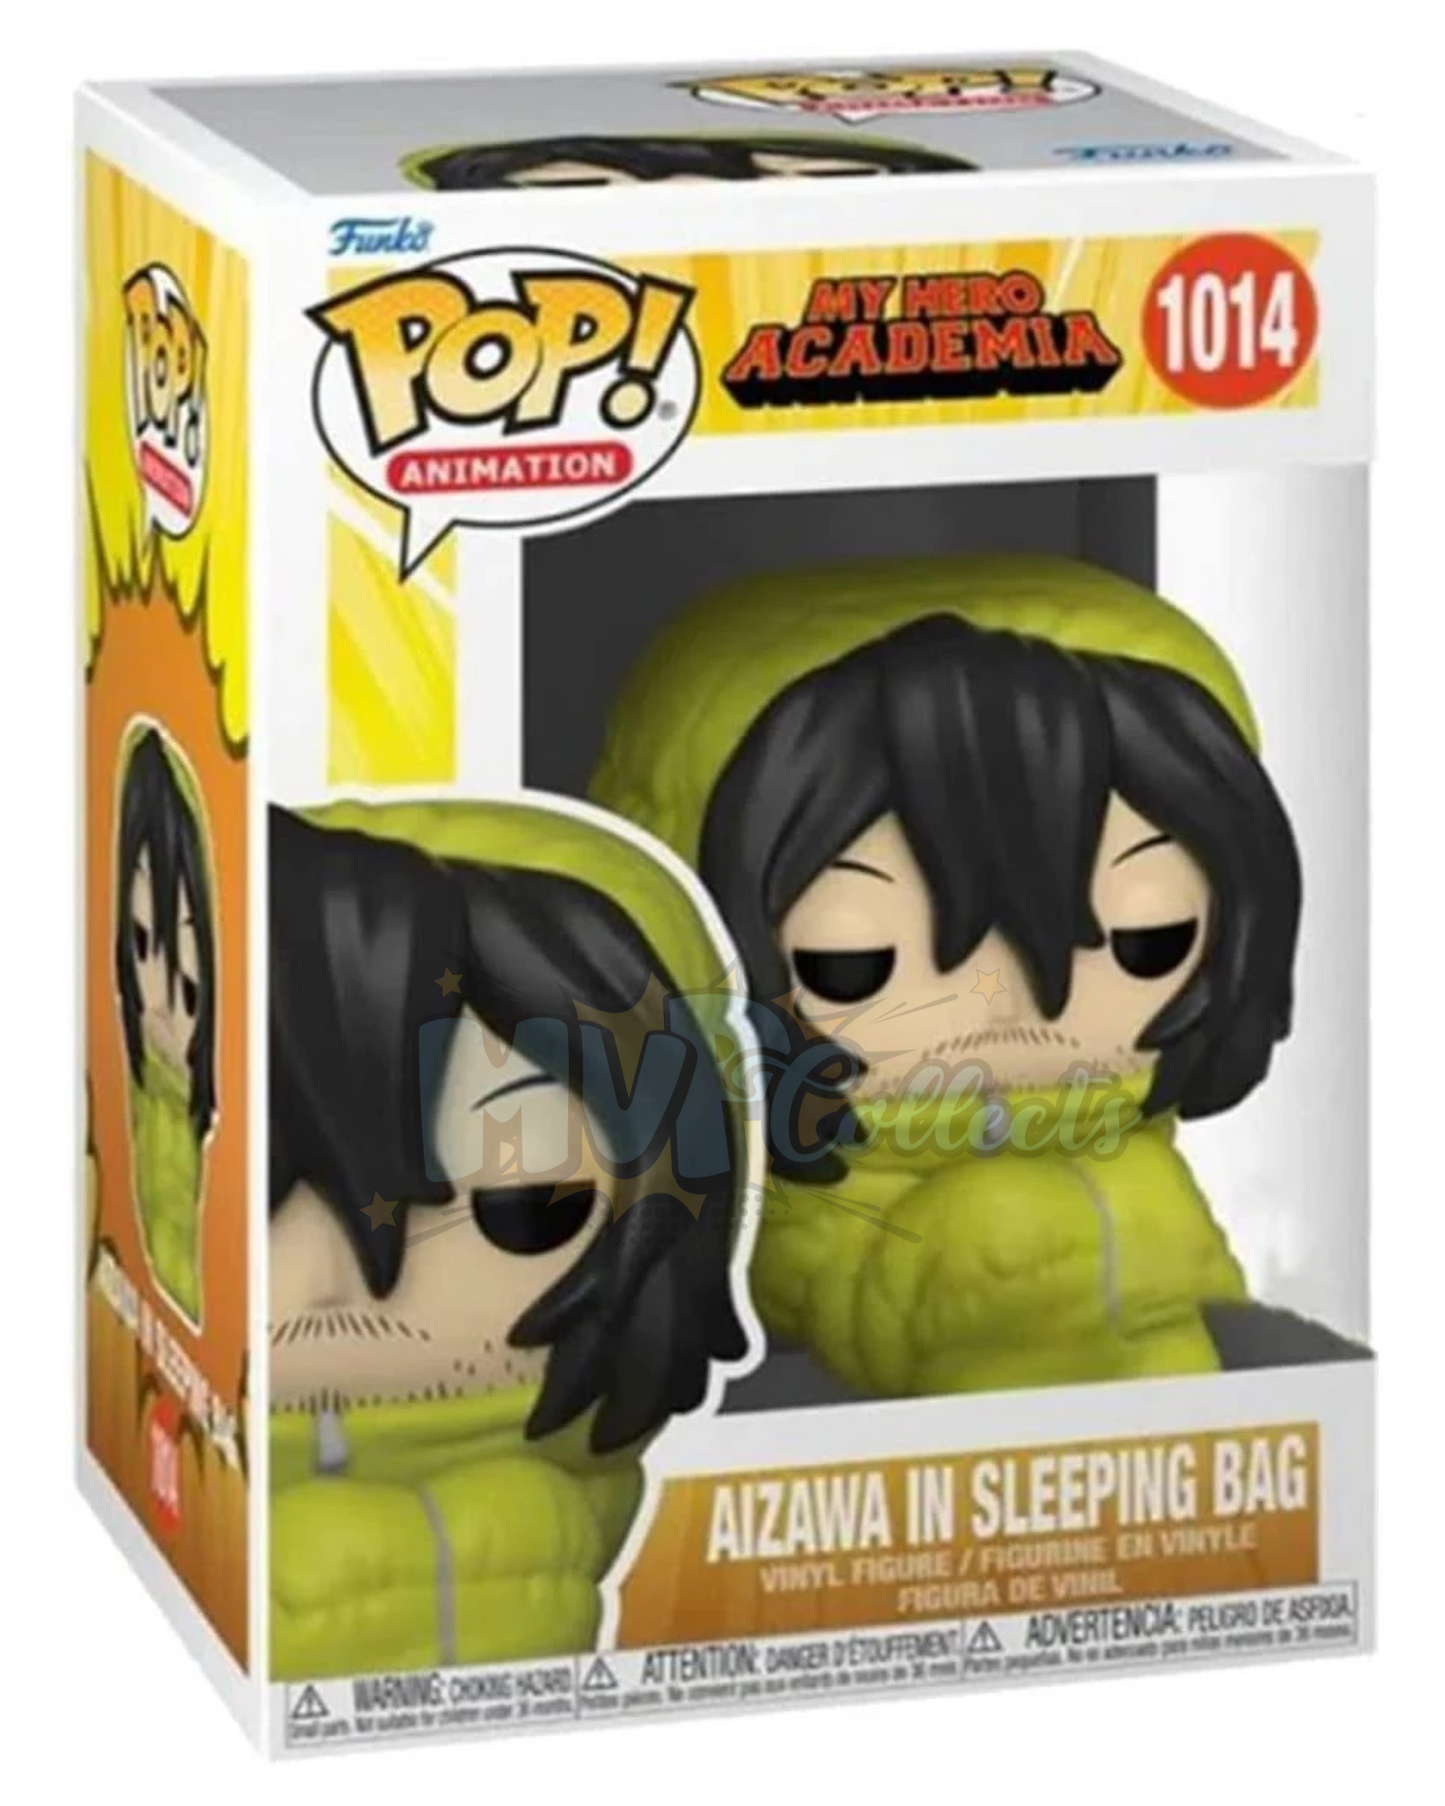 Aizawa in Sleeping Bag POP! (My Hero Academia) 1014 SE sticker